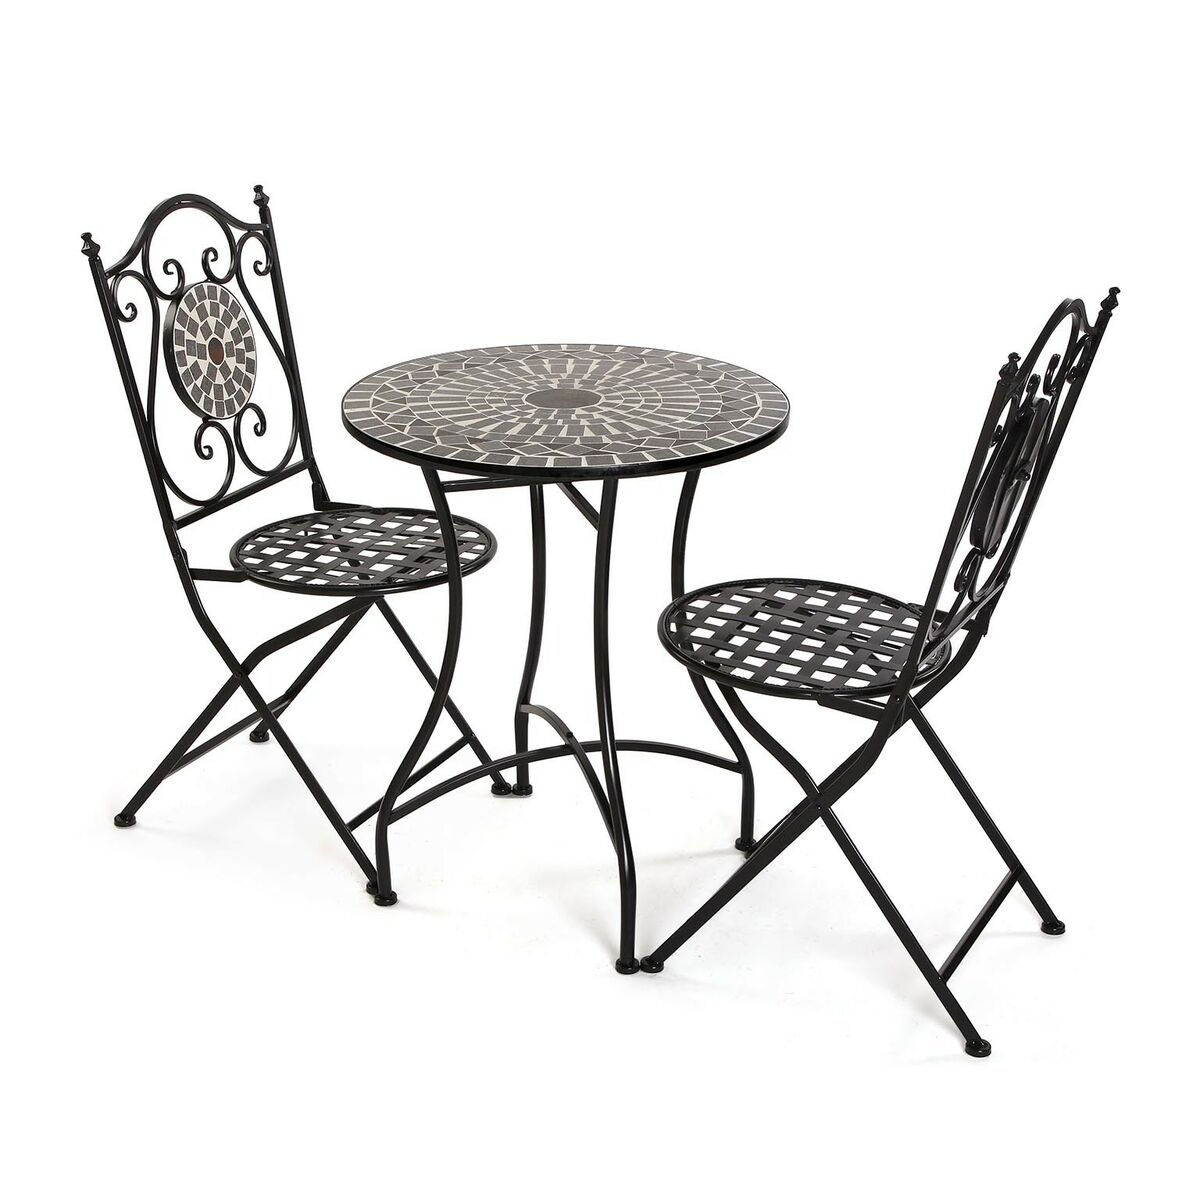 Table set with 2 chairs Versa Neilos Black Metal 60 x 71 x 60 cm